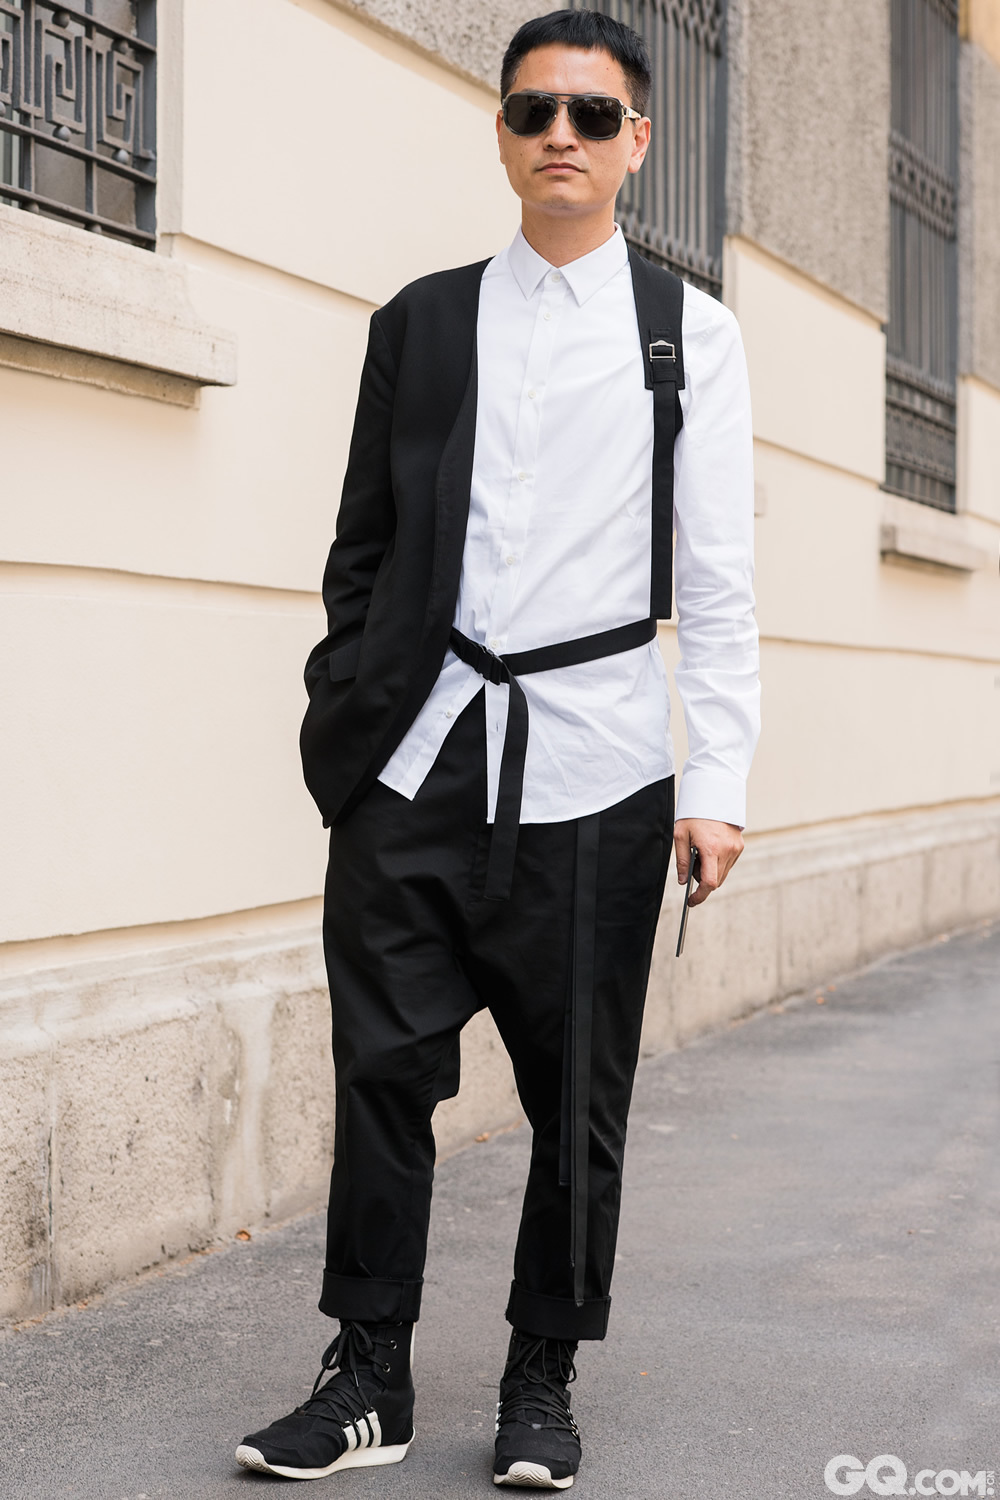 Franky
Jacket: GGL Motor Jacket
Suit: COS
Pants: Glame White
Sunglasses: Hellen Mck

Inspiration: Color Black and white
（黑白色系）